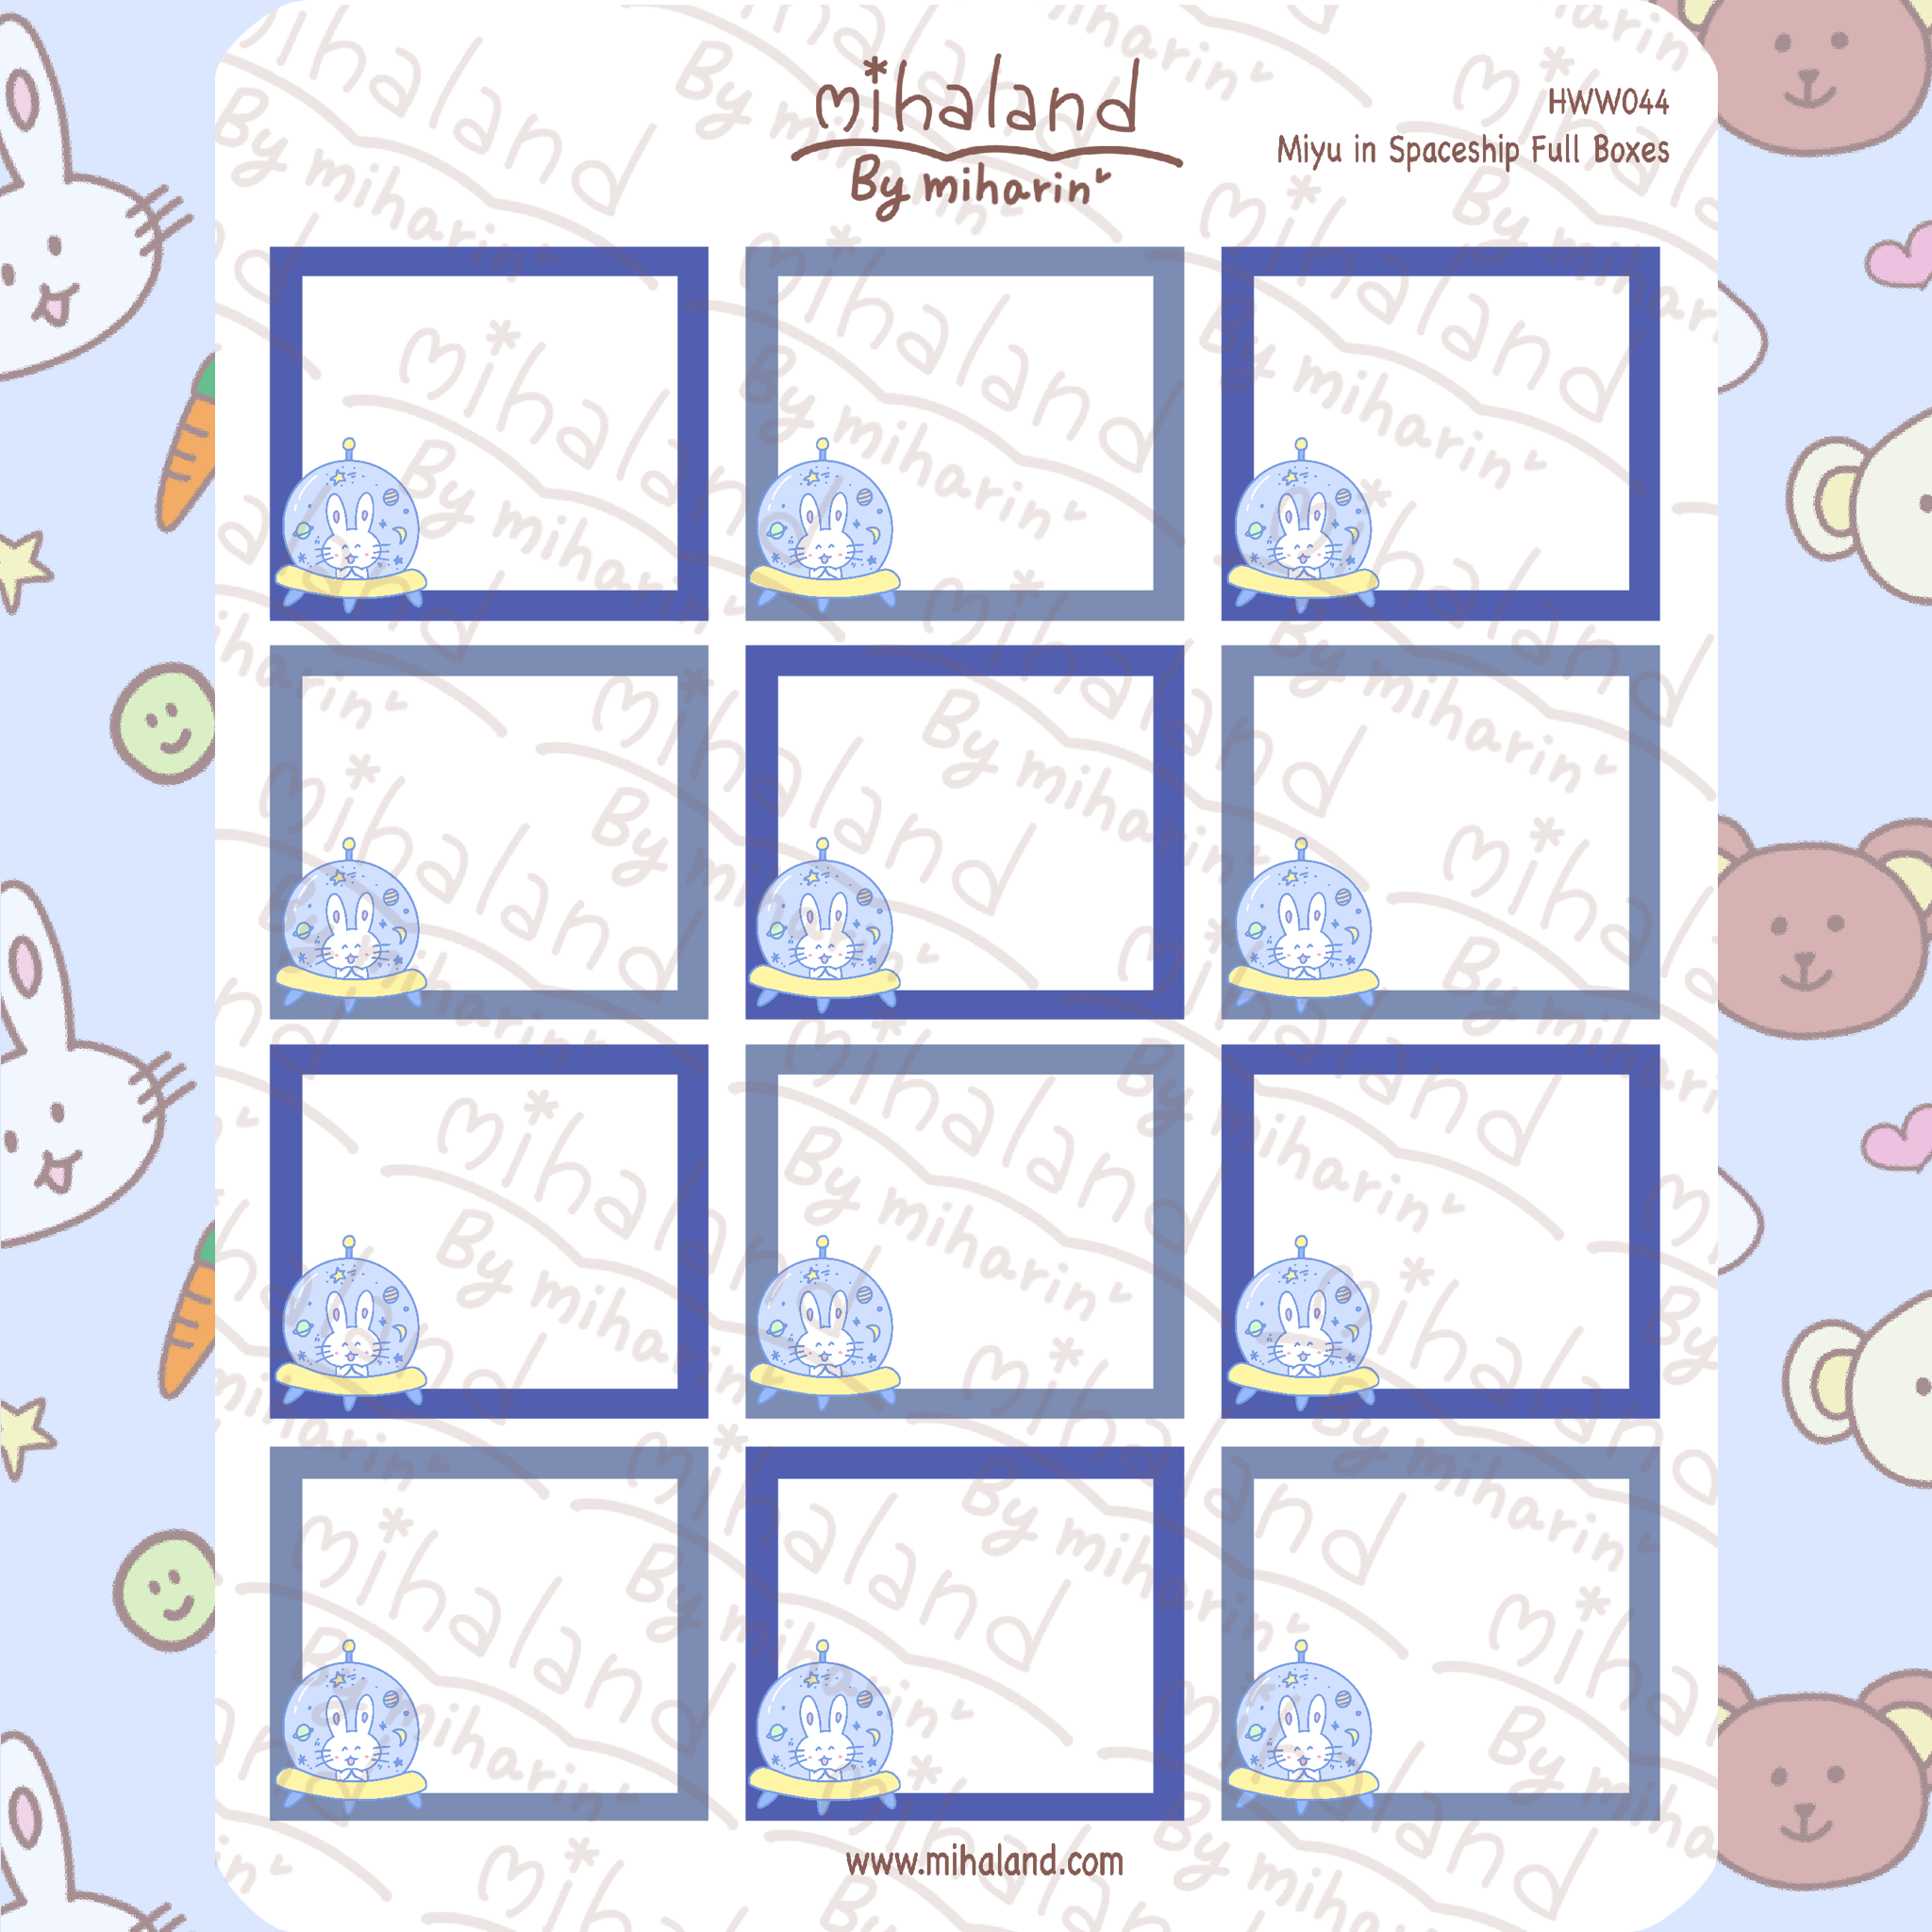 Miyu in Spaceship Full Boxes for Hobonichi Weeks Planner Stickers (HWW044)